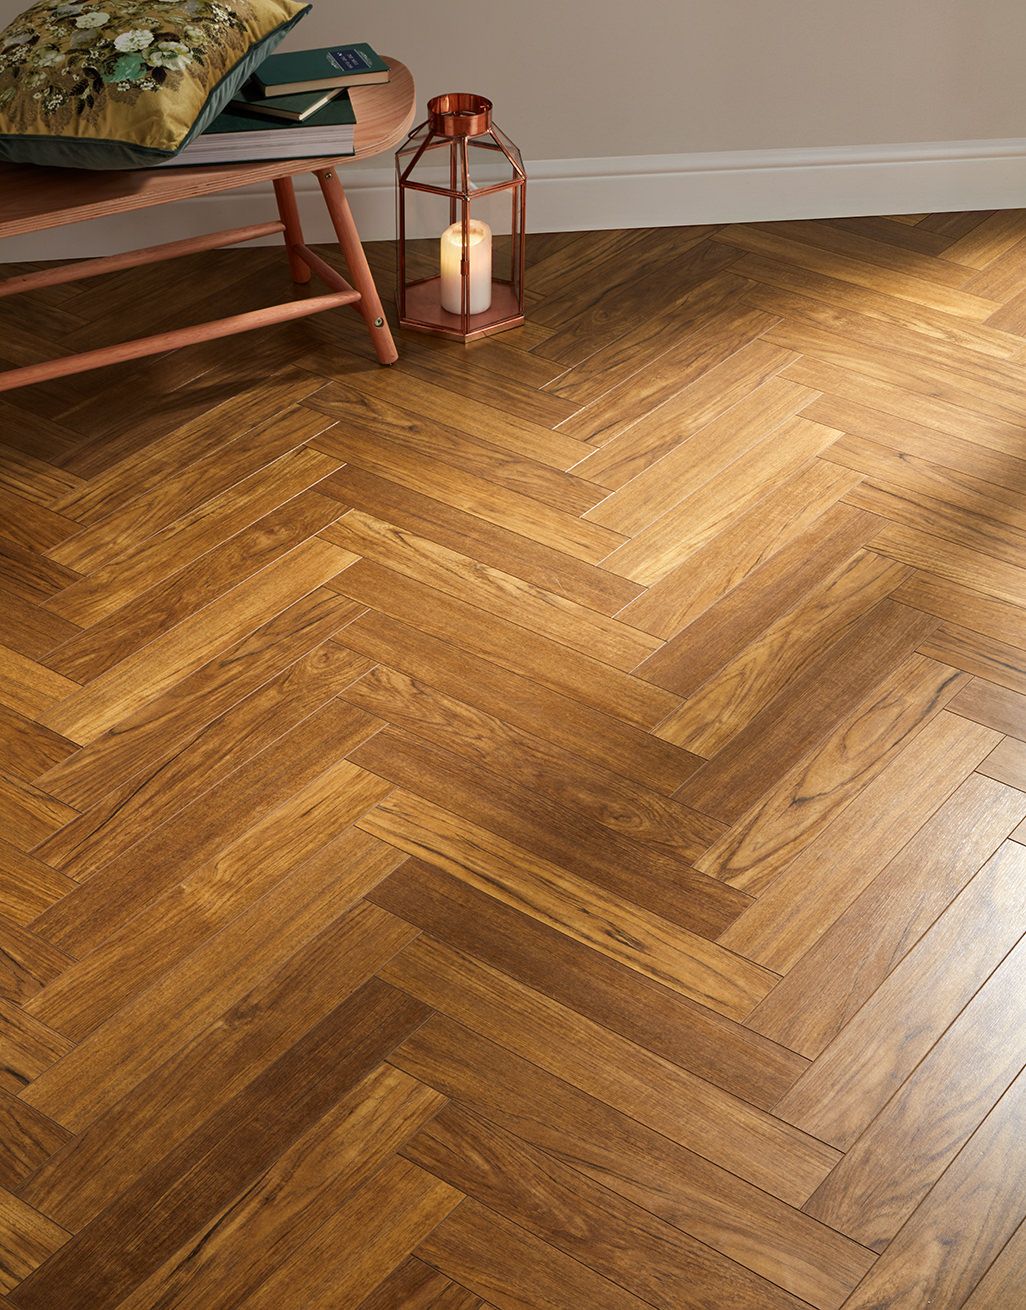 Vintage Chateau Herringbone Luxury Teak Laminate Flooring Direct Wood Flooring